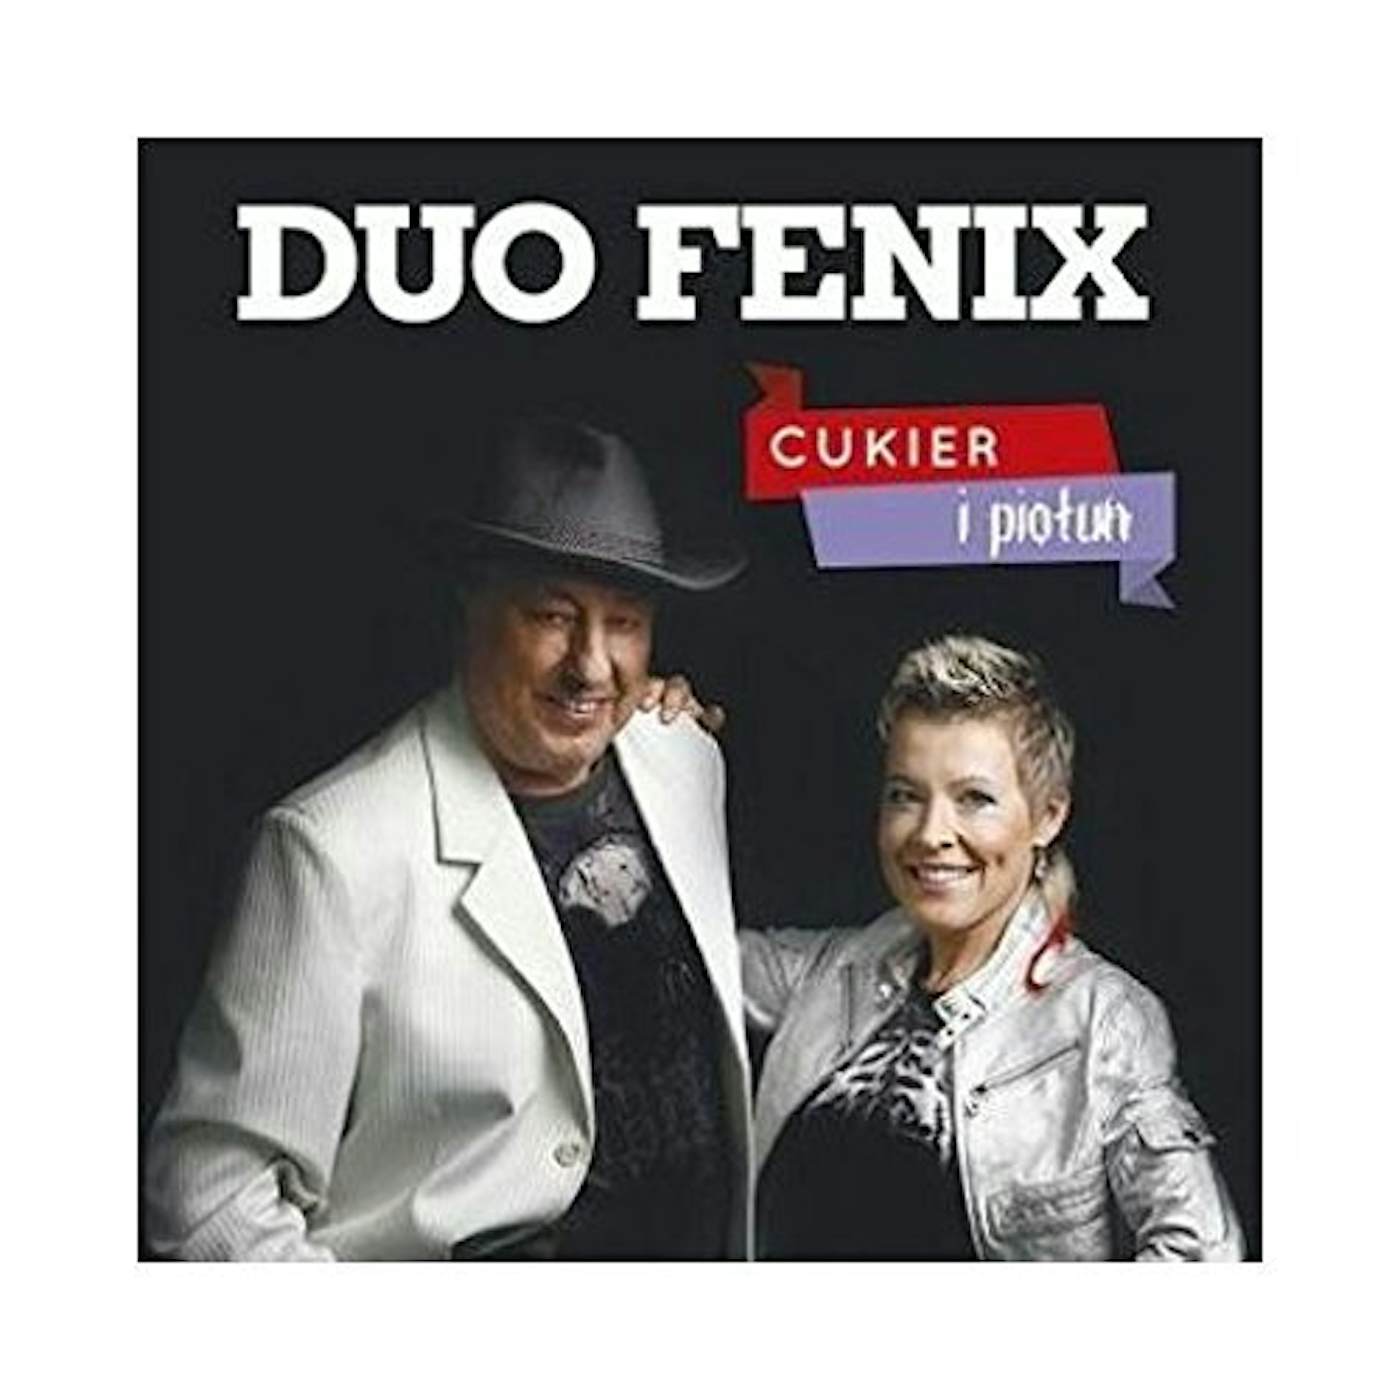 Duo Fenix CUKIER I PIOLUN CD